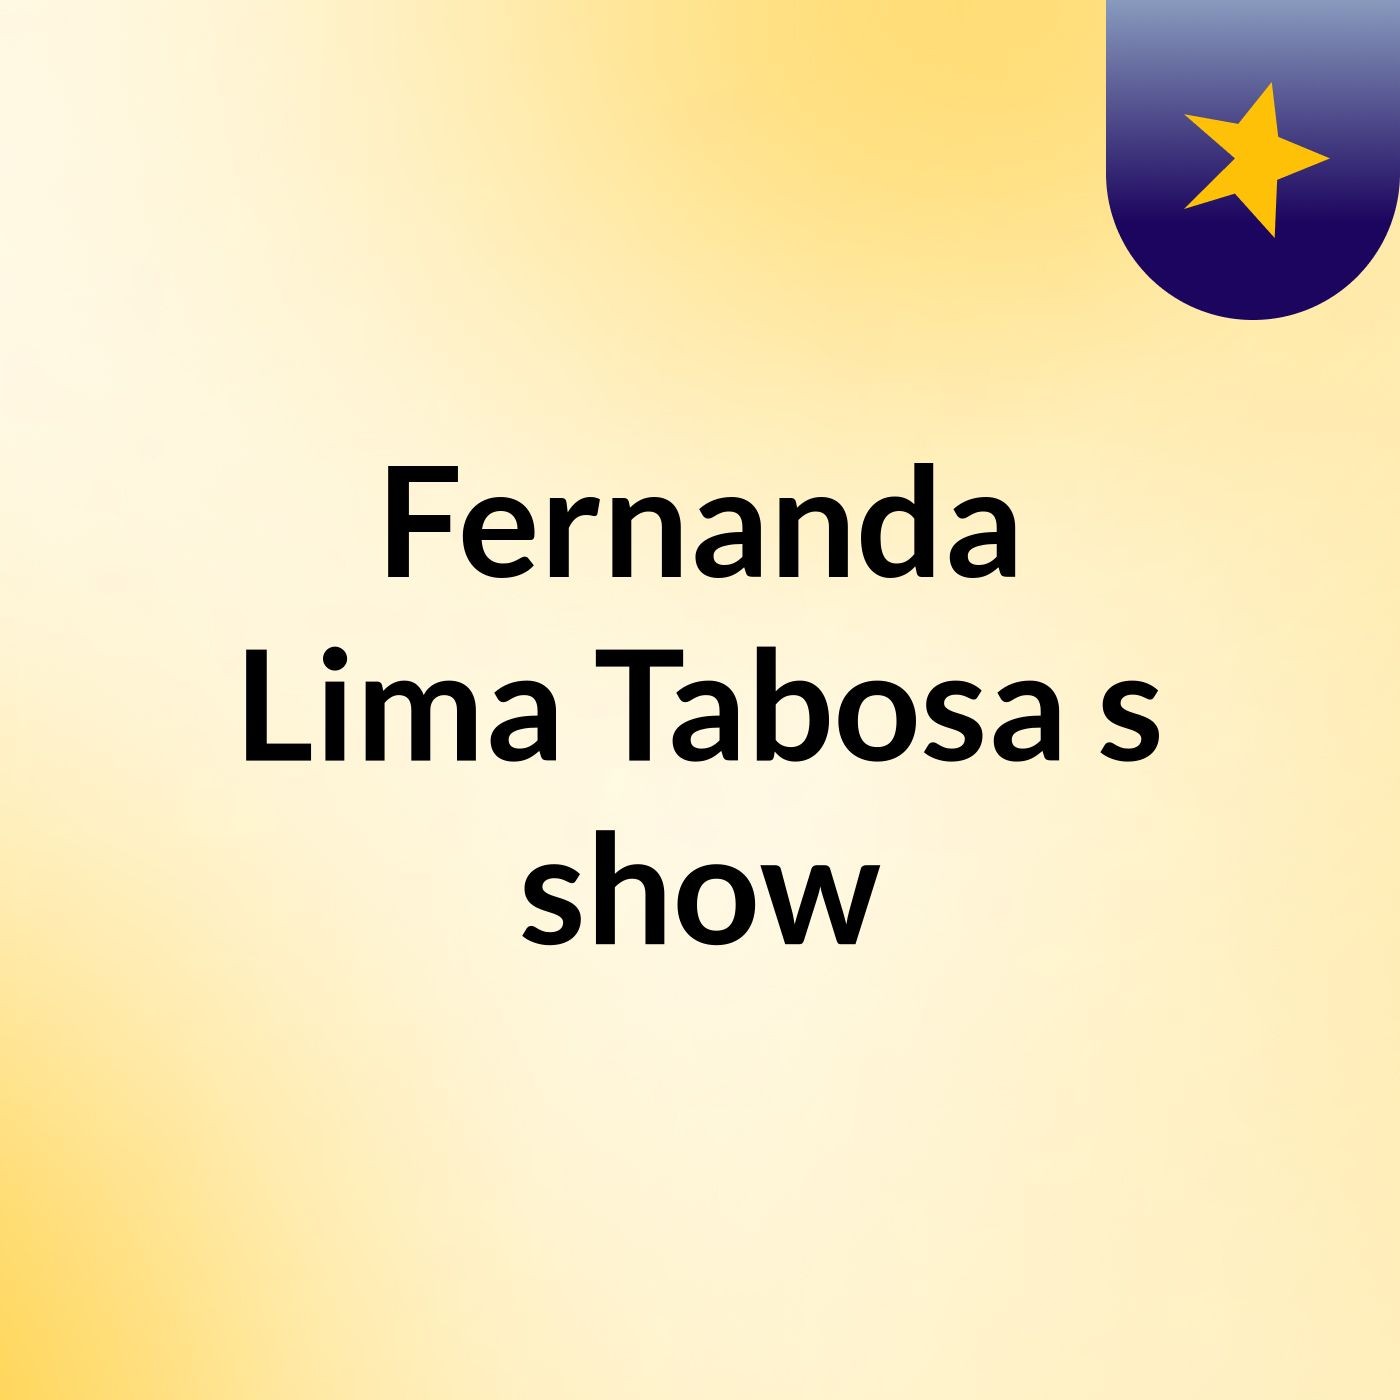 Fernanda Lima Tabosa's show